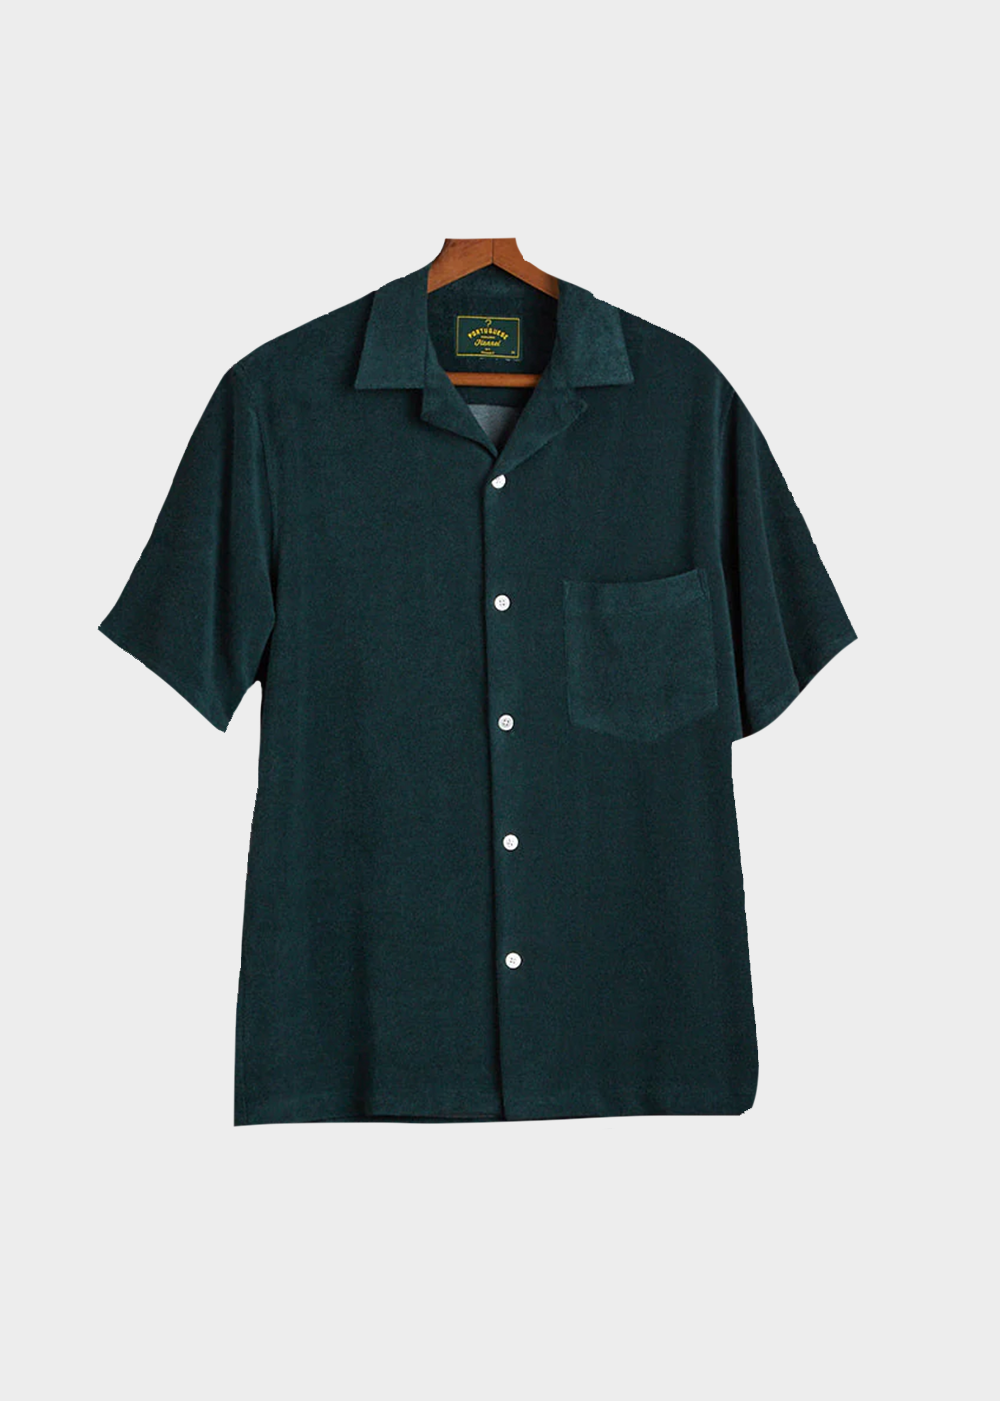 Terry Short Sleeve Shirt - Portuguese Flannel - Danali